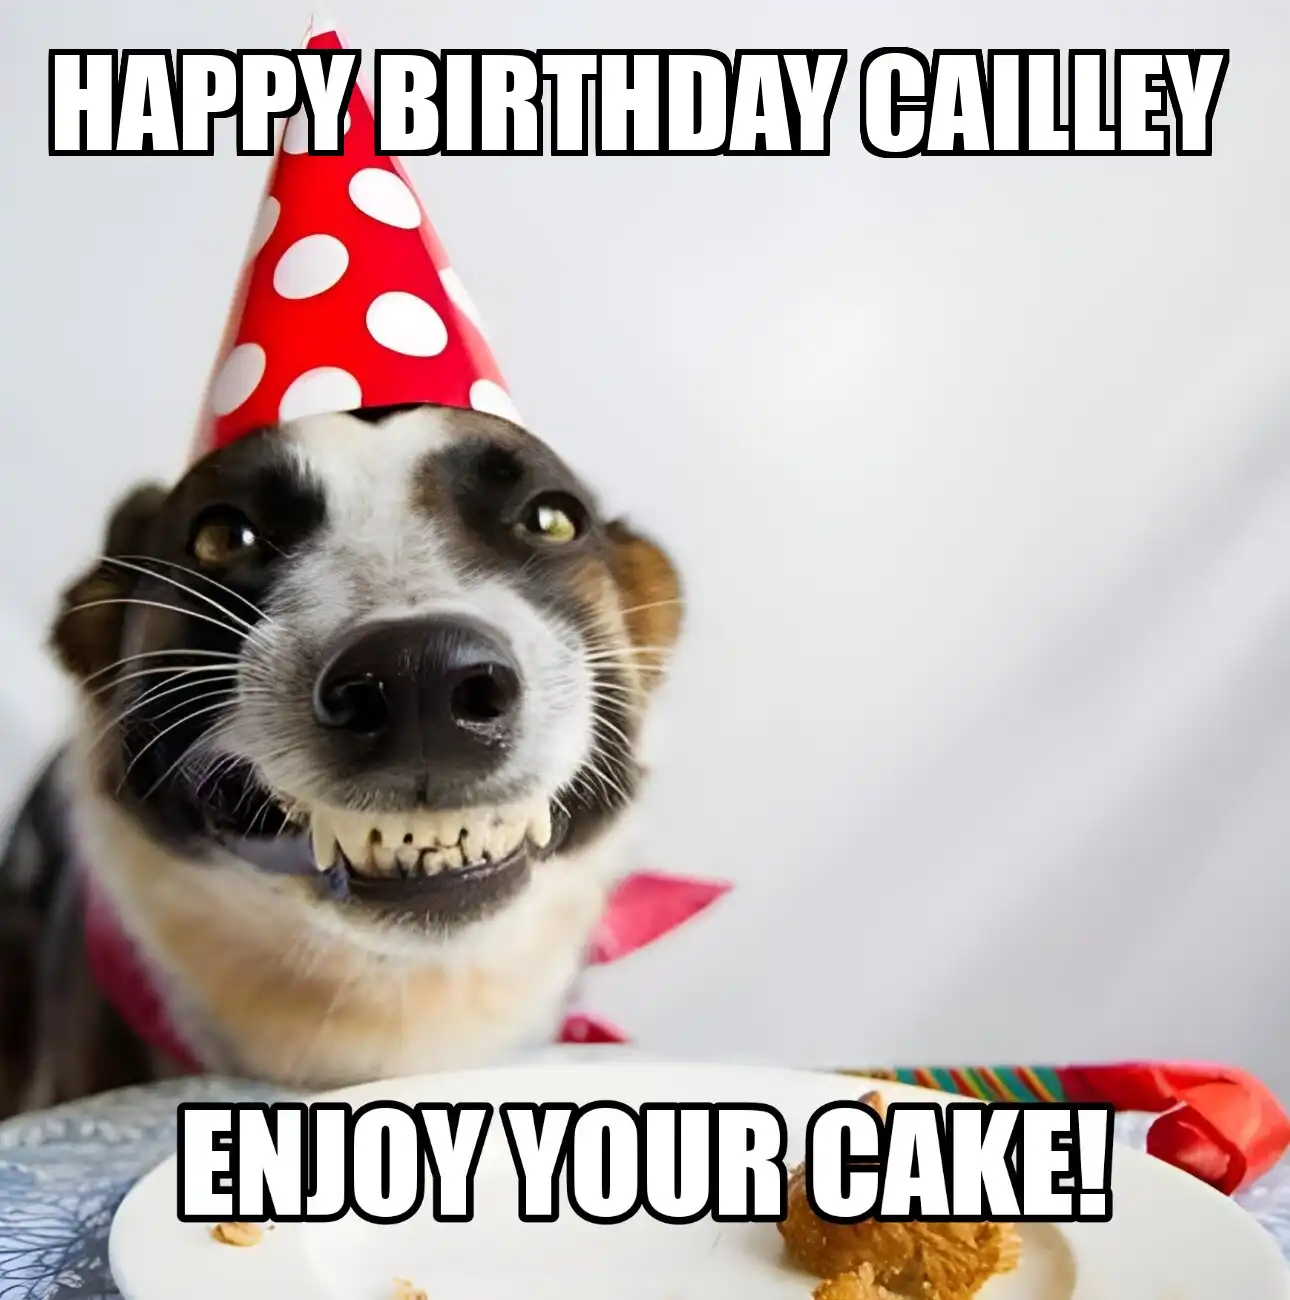 Happy Birthday Cailley Enjoy Your Cake Dog Meme